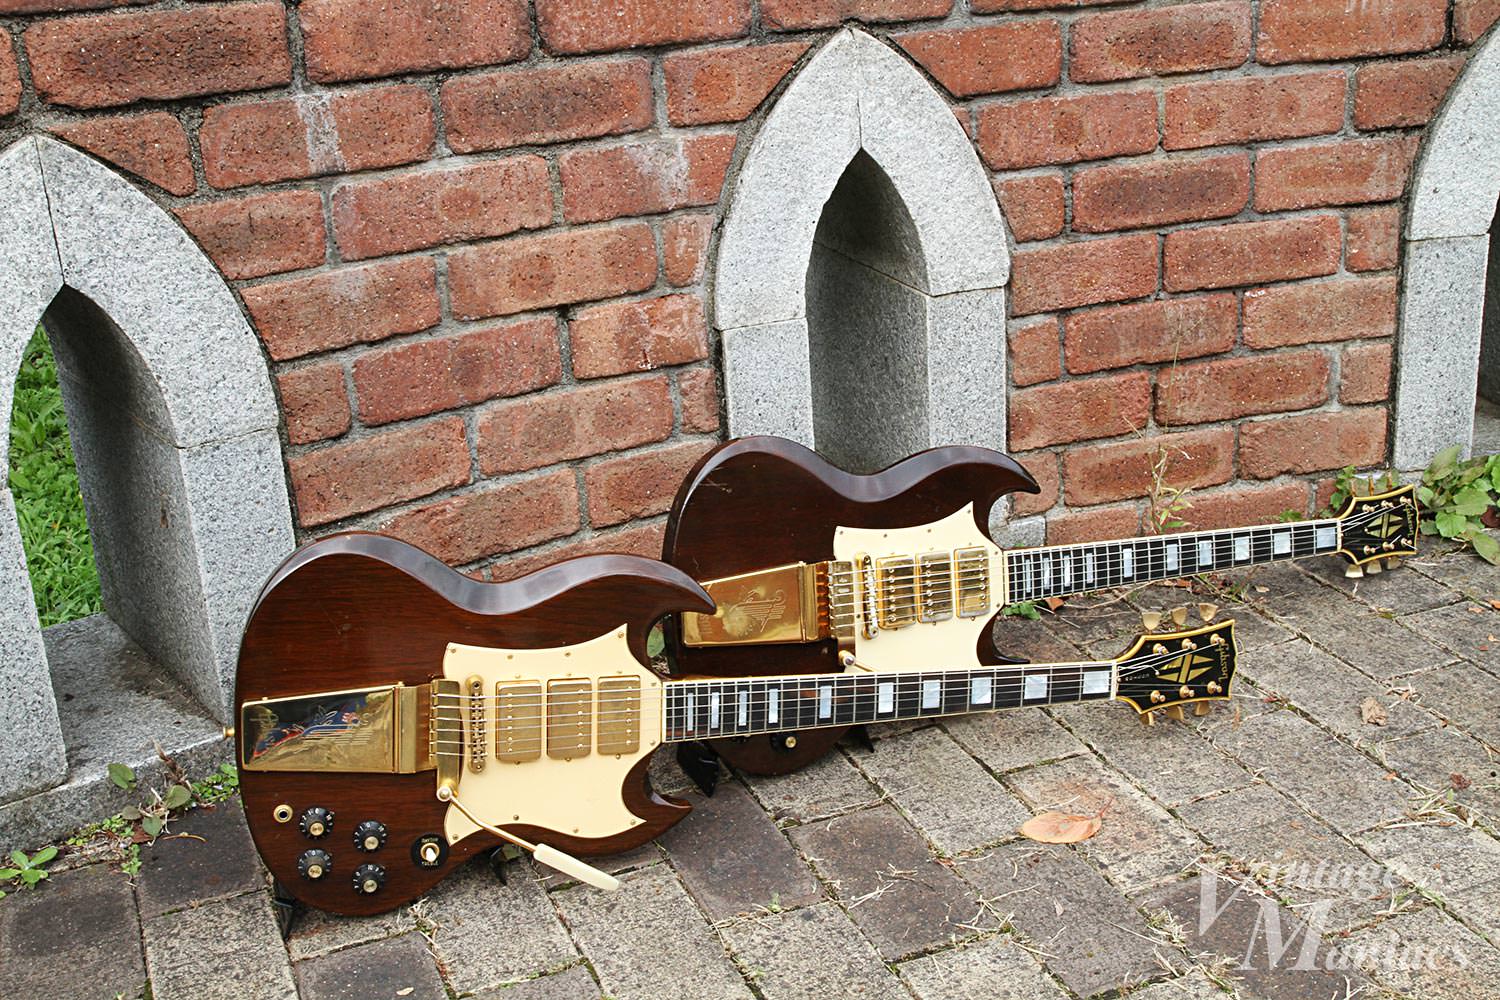 Gibson SG Custom - カスタムな戦闘機 (前編) | Vintage Maniacs